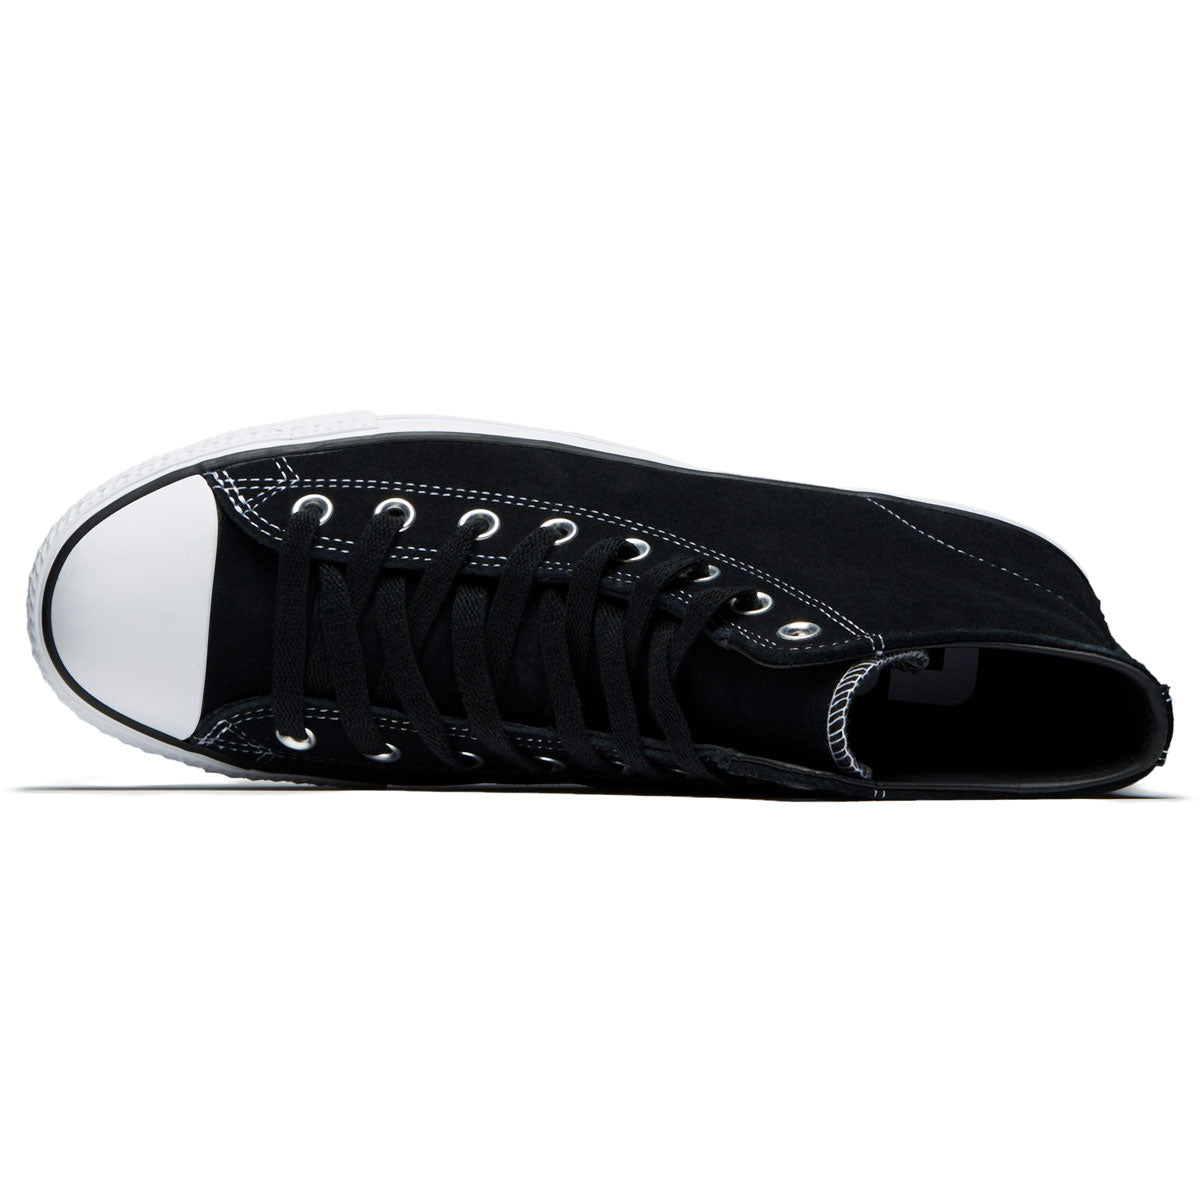 Converse Chuck Taylor All Star Pro Suede Hi Shoes - Black/Black/White, – CCS